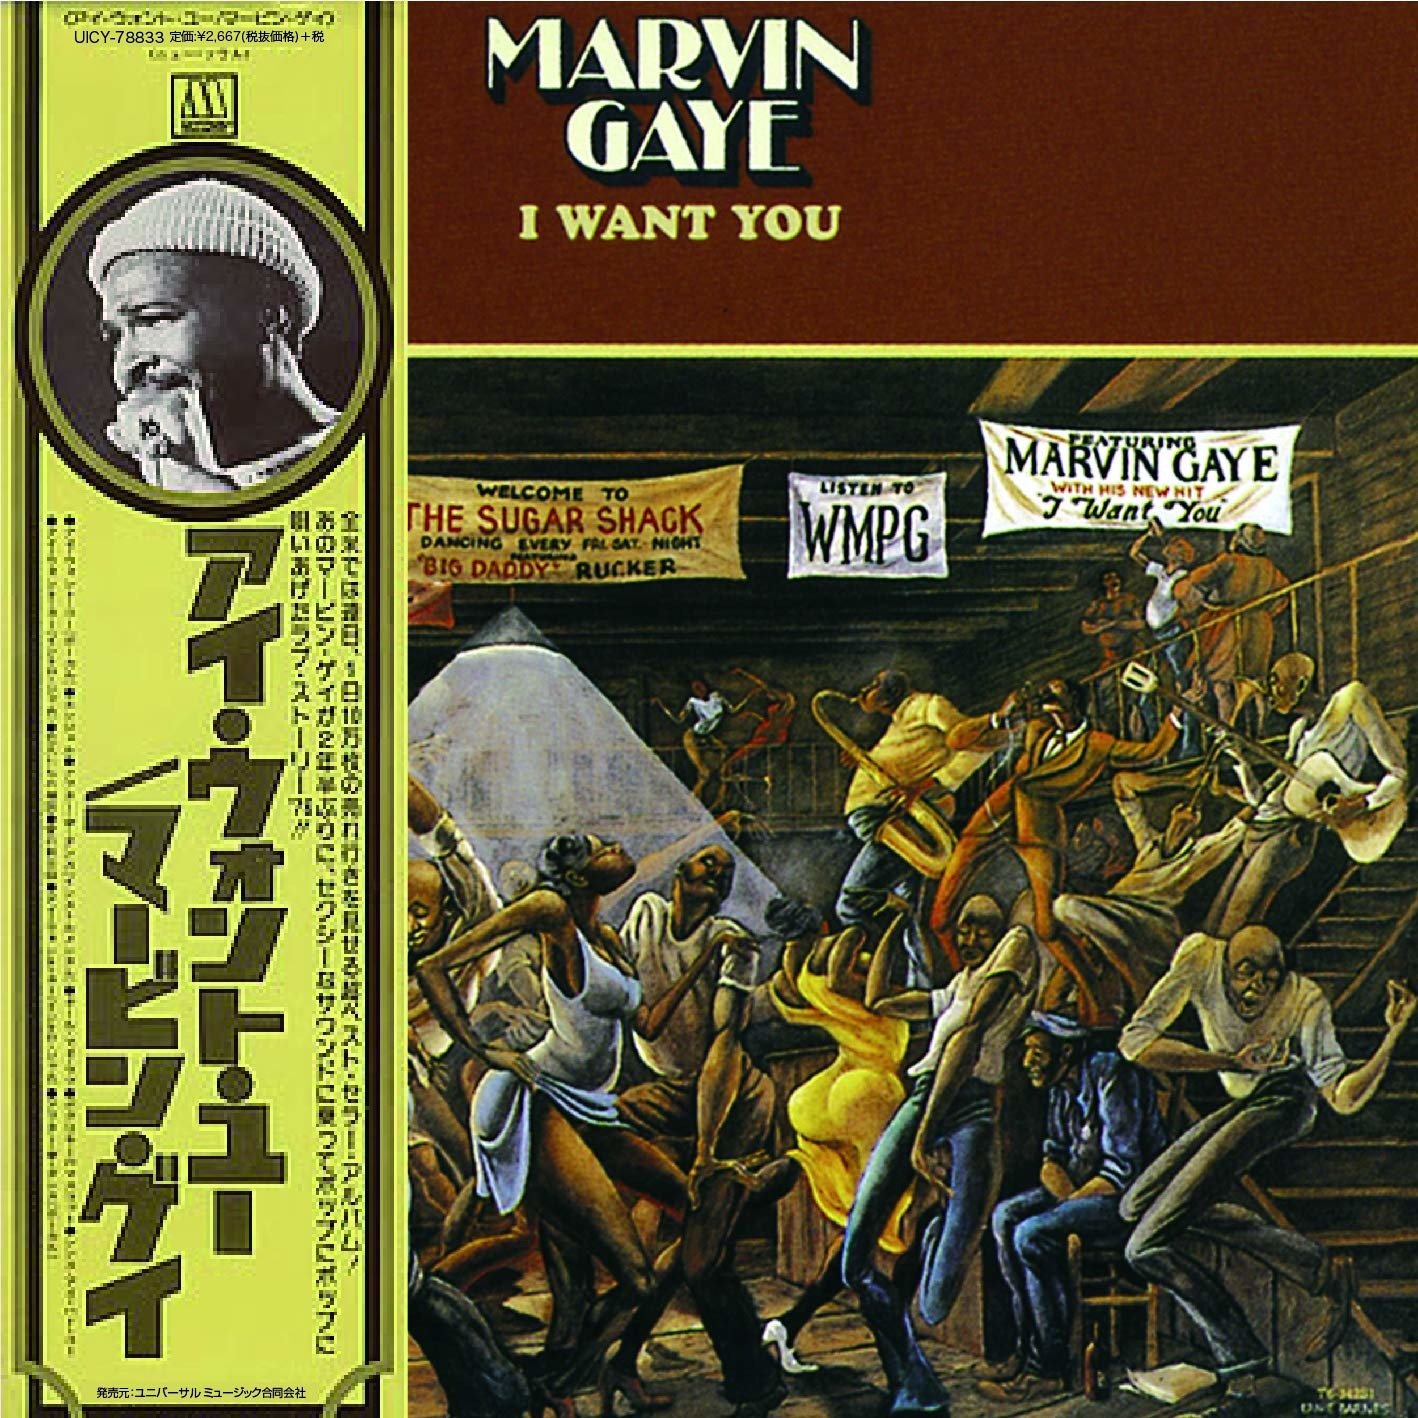 CD Shop - GAYE, MARVIN I WANT YOU